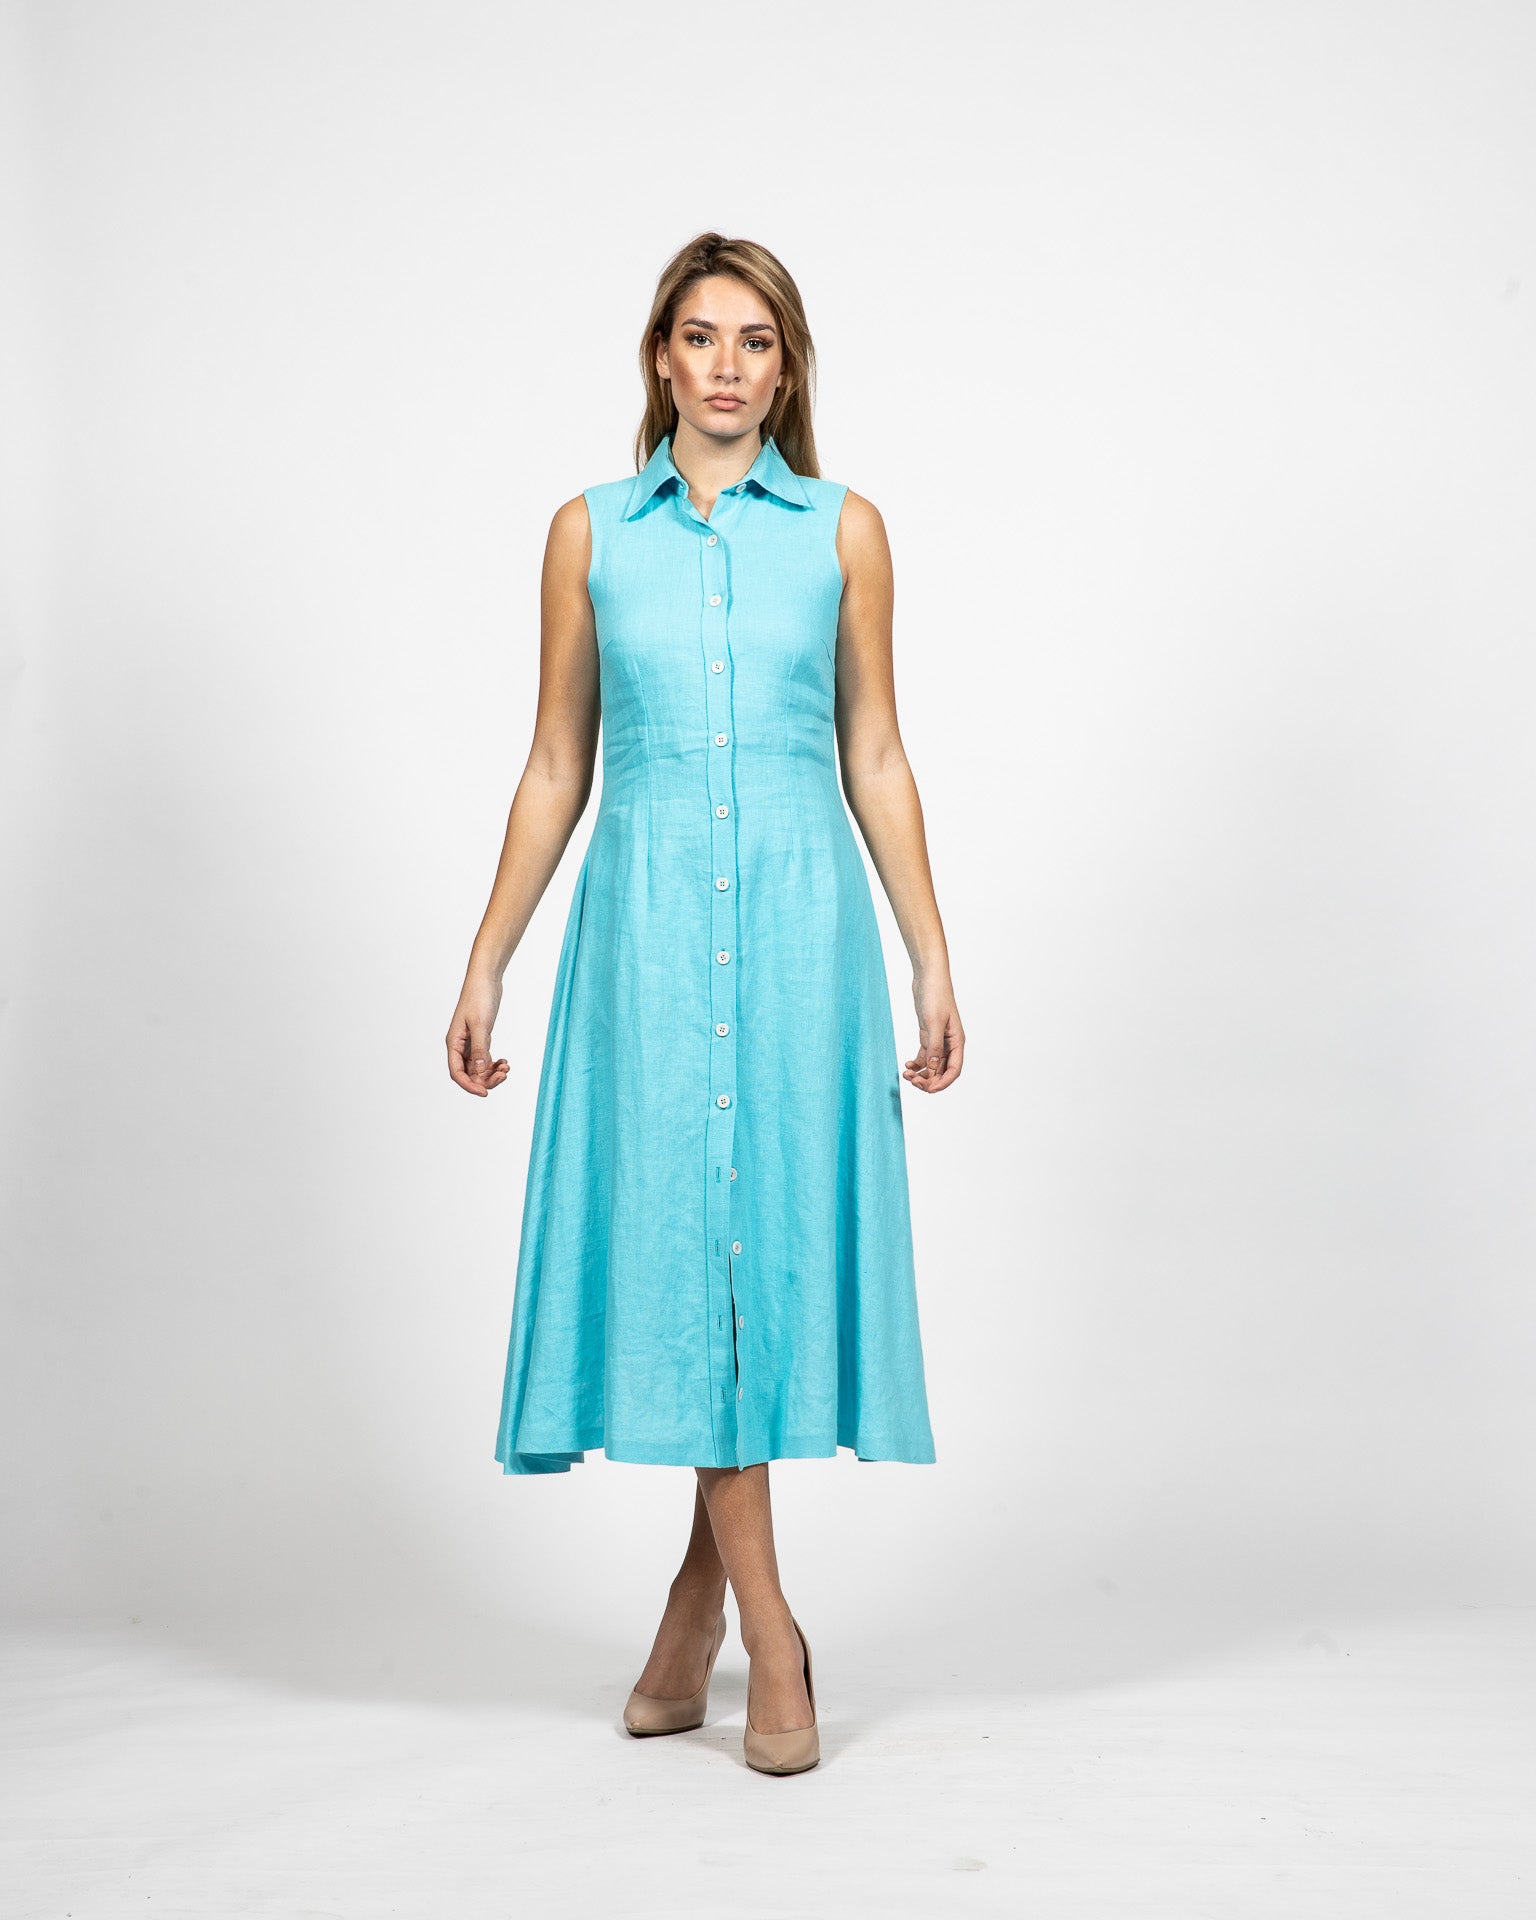 Long Buttoned Collar Dress Turquoise - Front View - Samuel Vartan